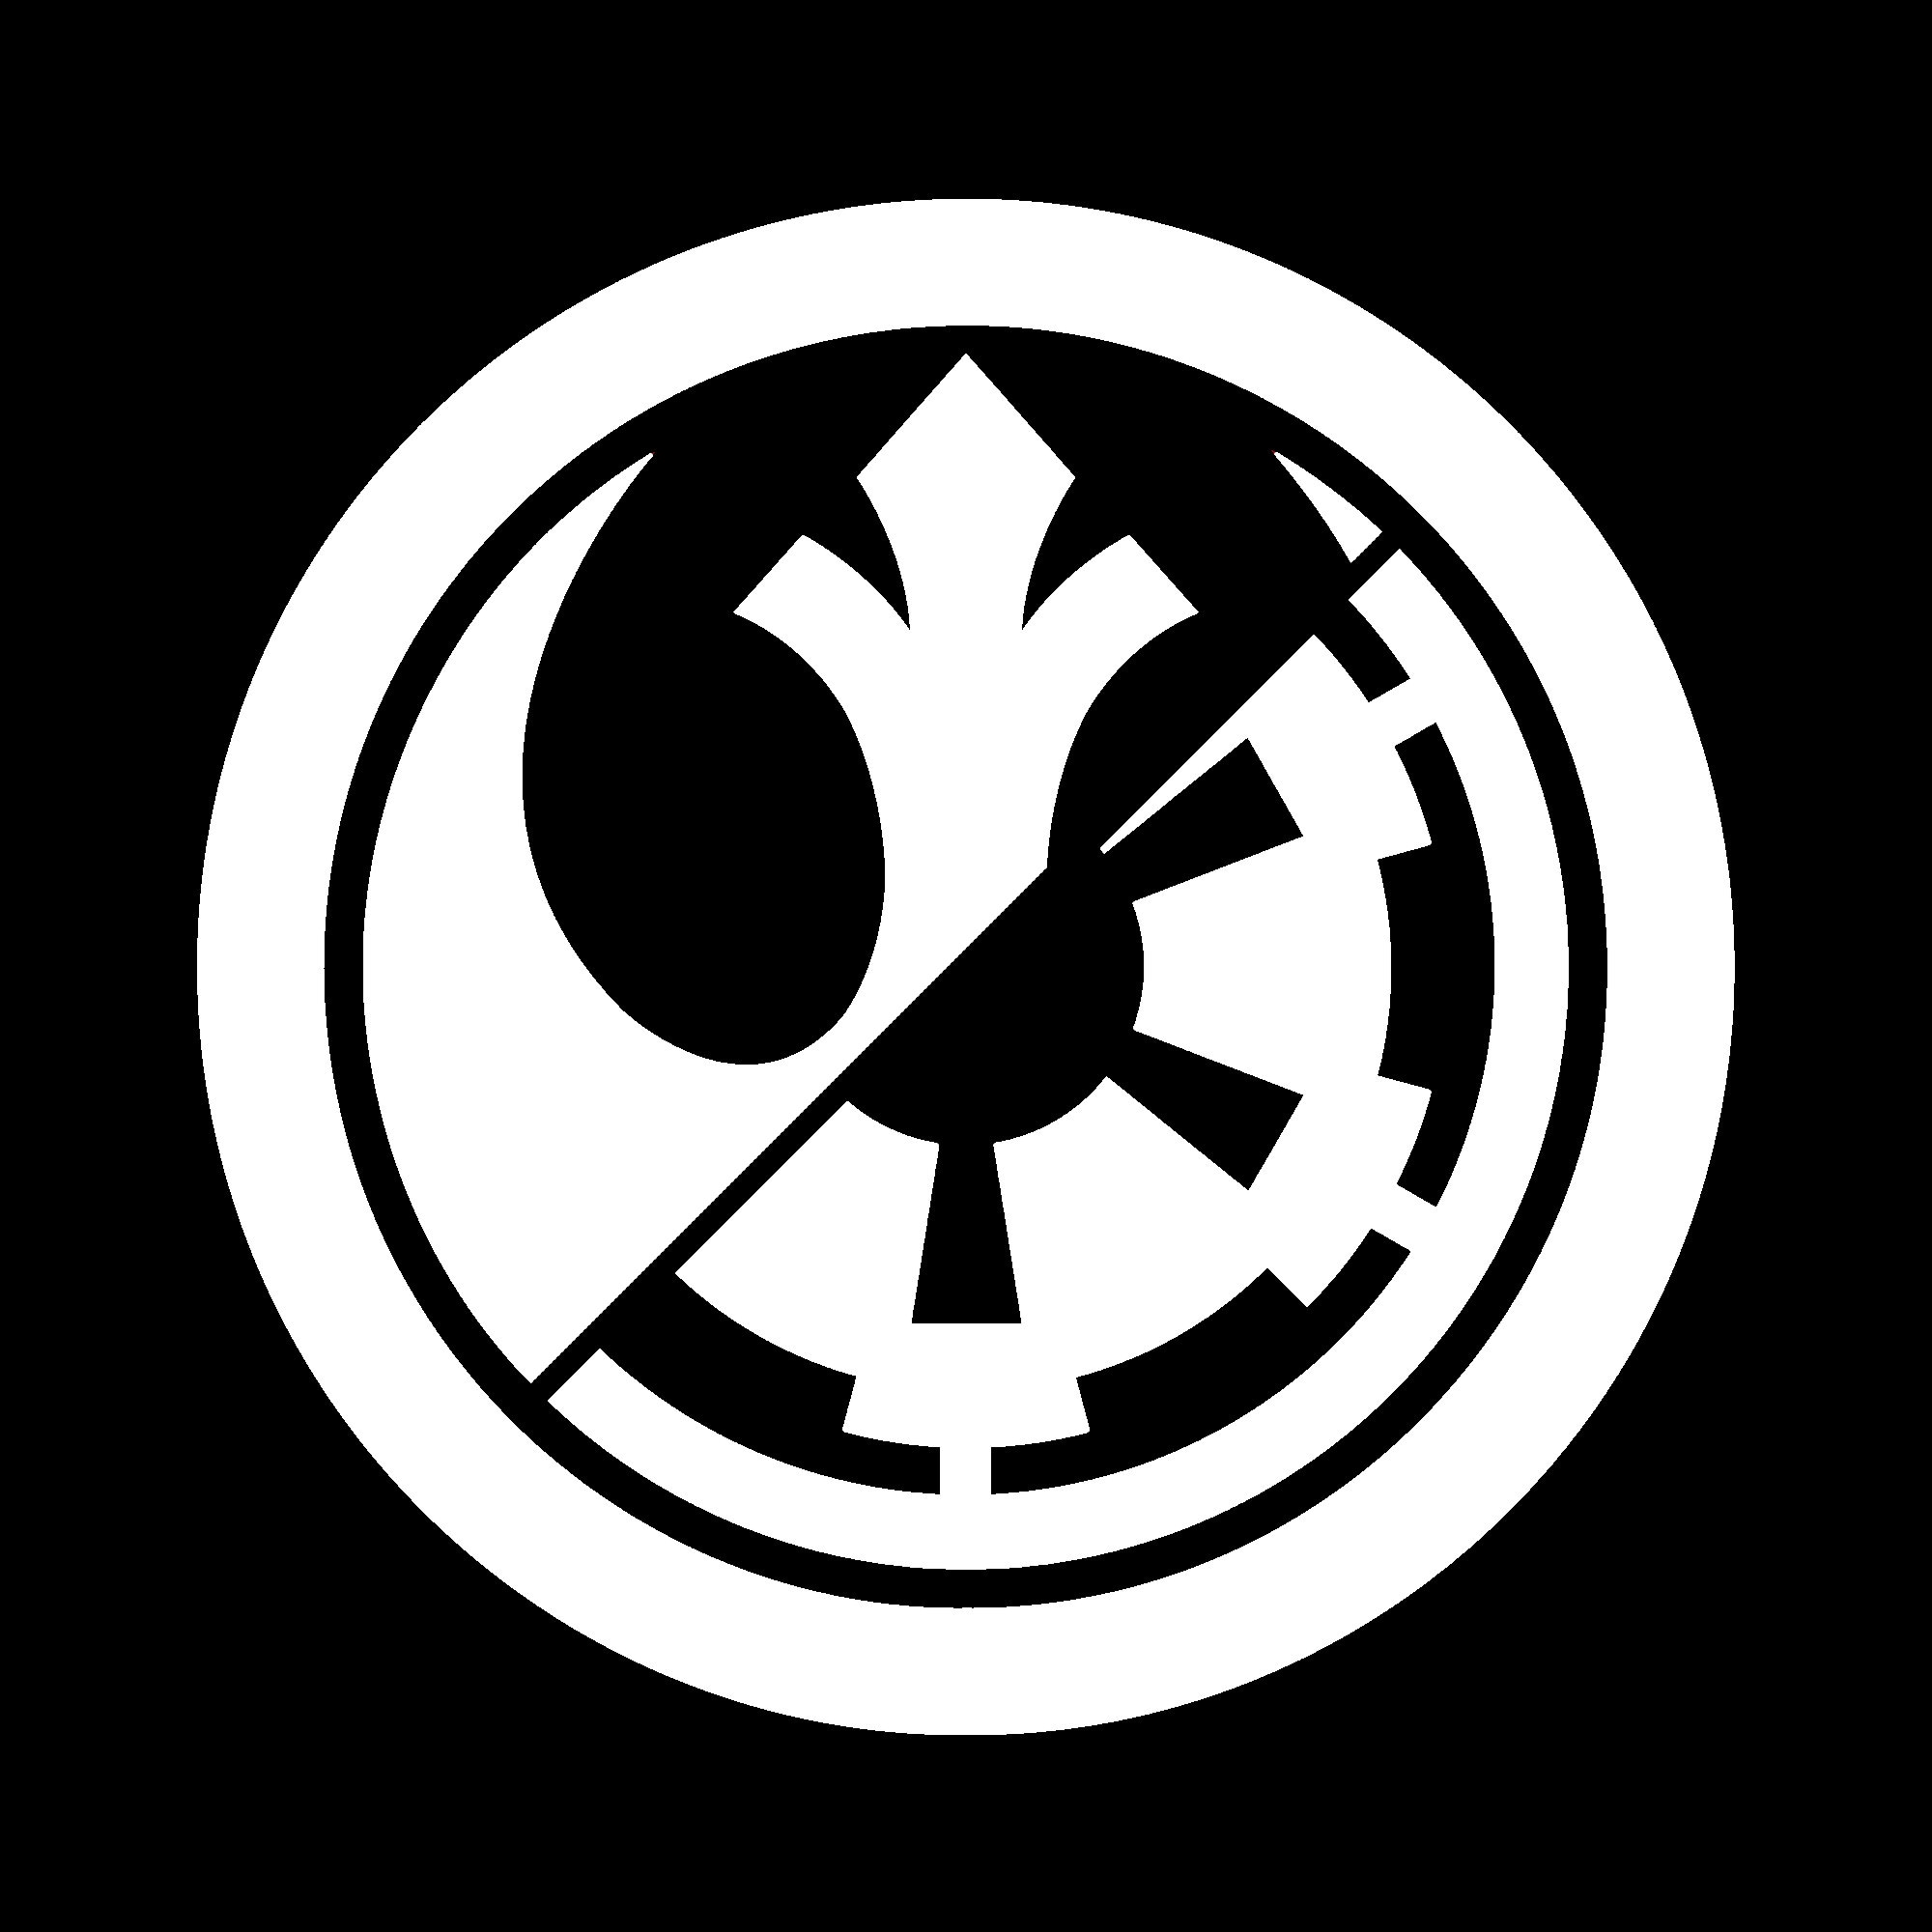 Star Wars Rebel Empire Vinyl Decal Sticker for Laptop Car - Etsy